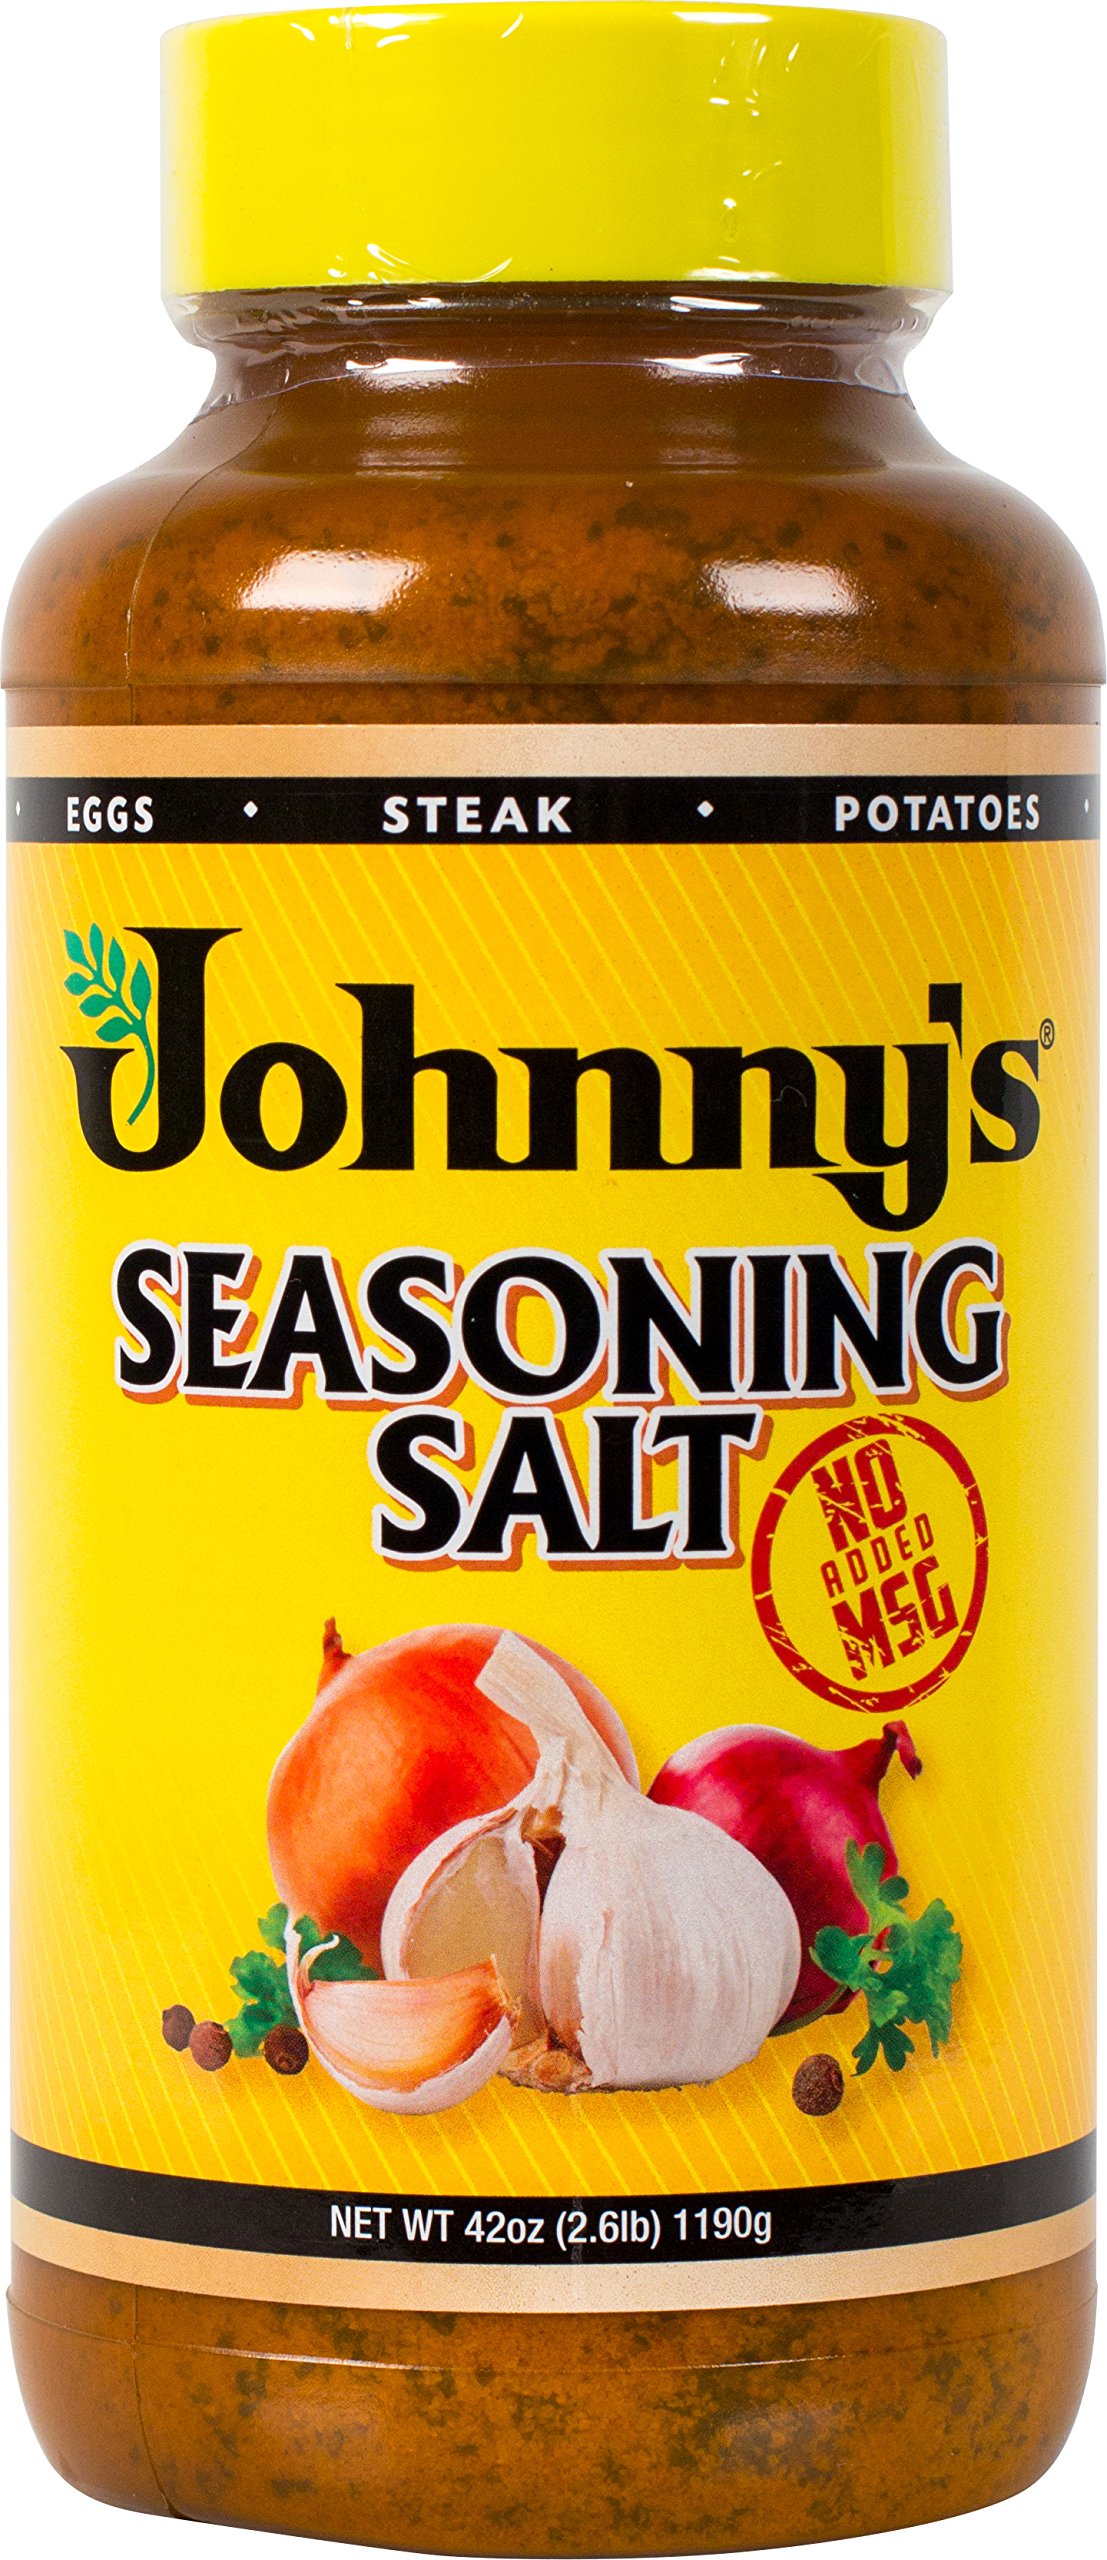 Johnny Fleemans Marinade and Seasoning, Steak, Salt, Spices & Seasonings